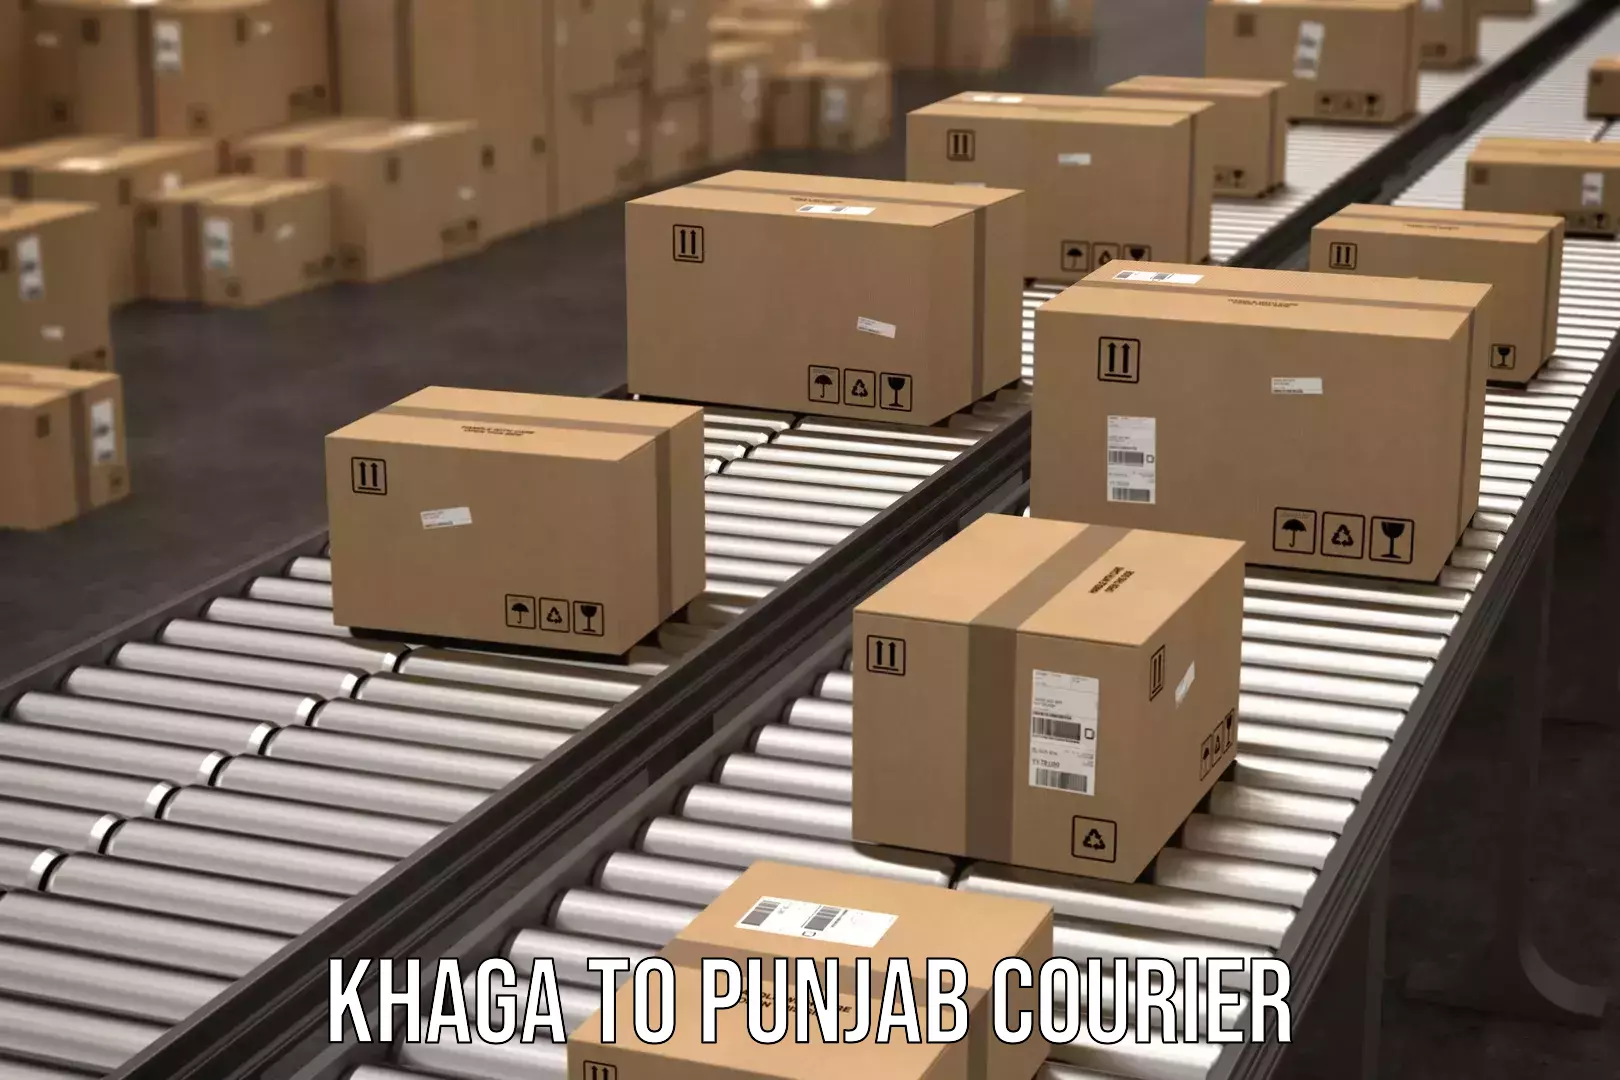 Reliable package handling Khaga to Punjab